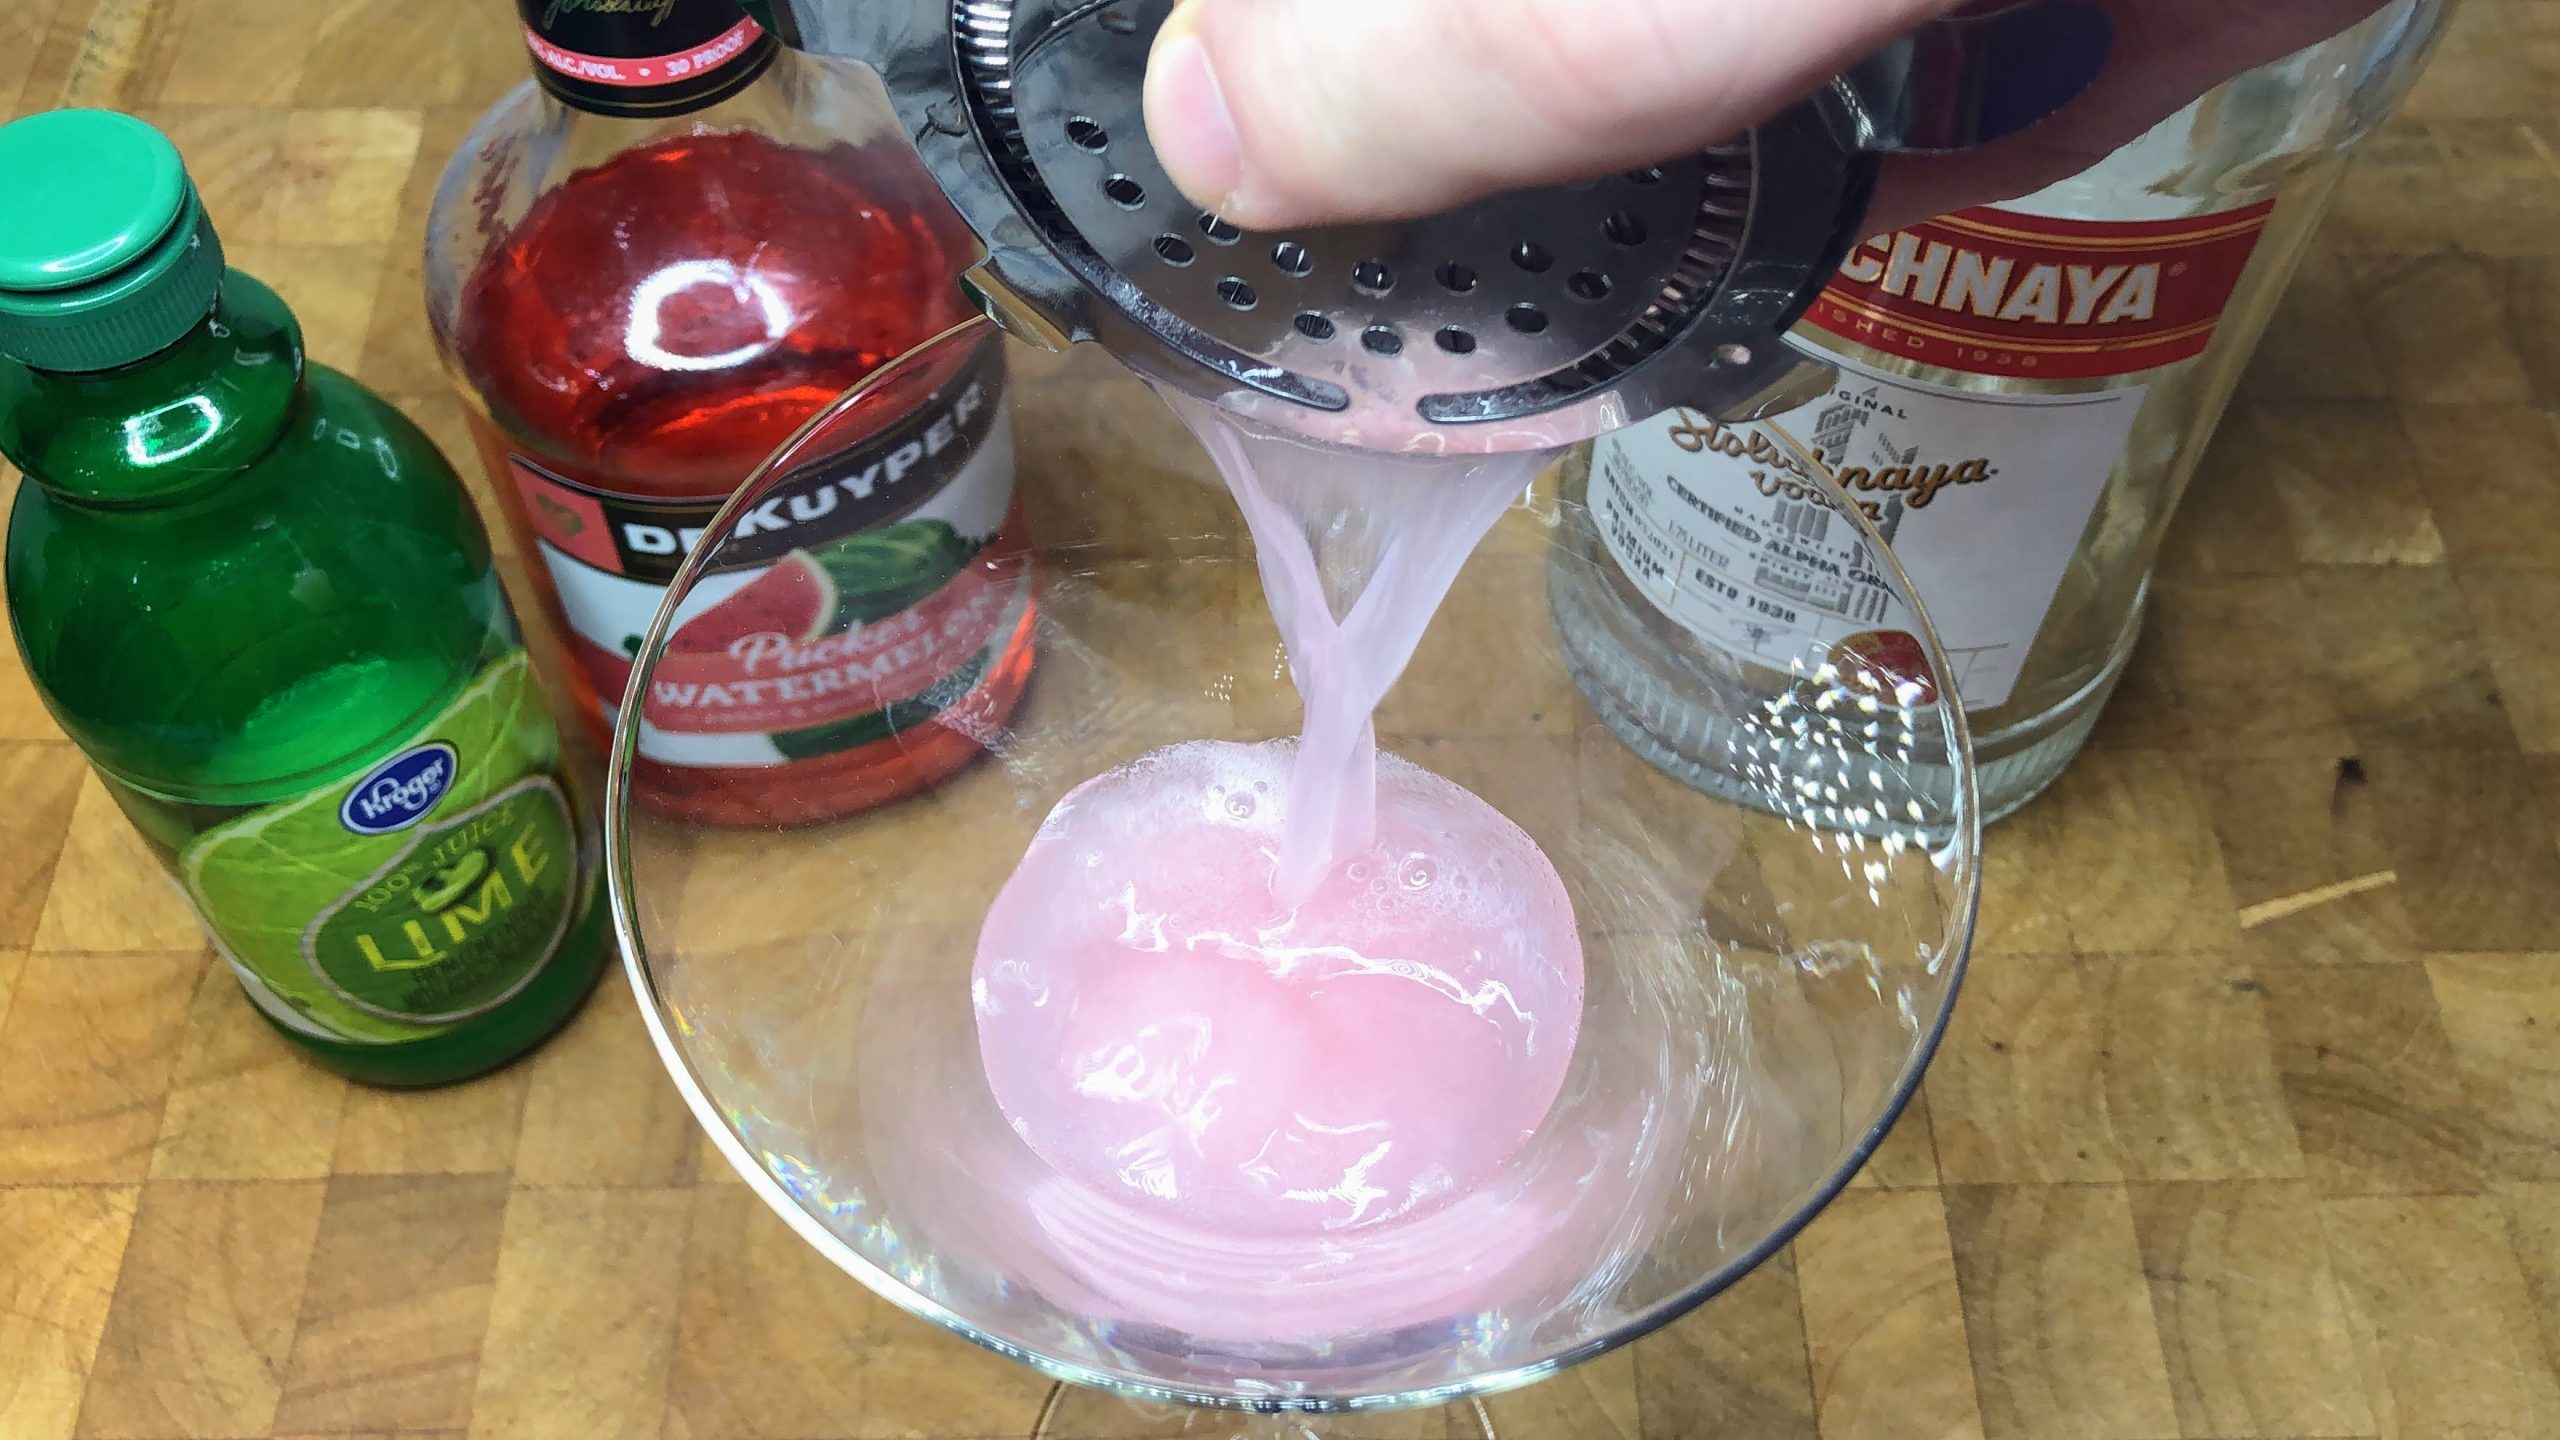 Straining watermelon pucker martini from shaker into glass.